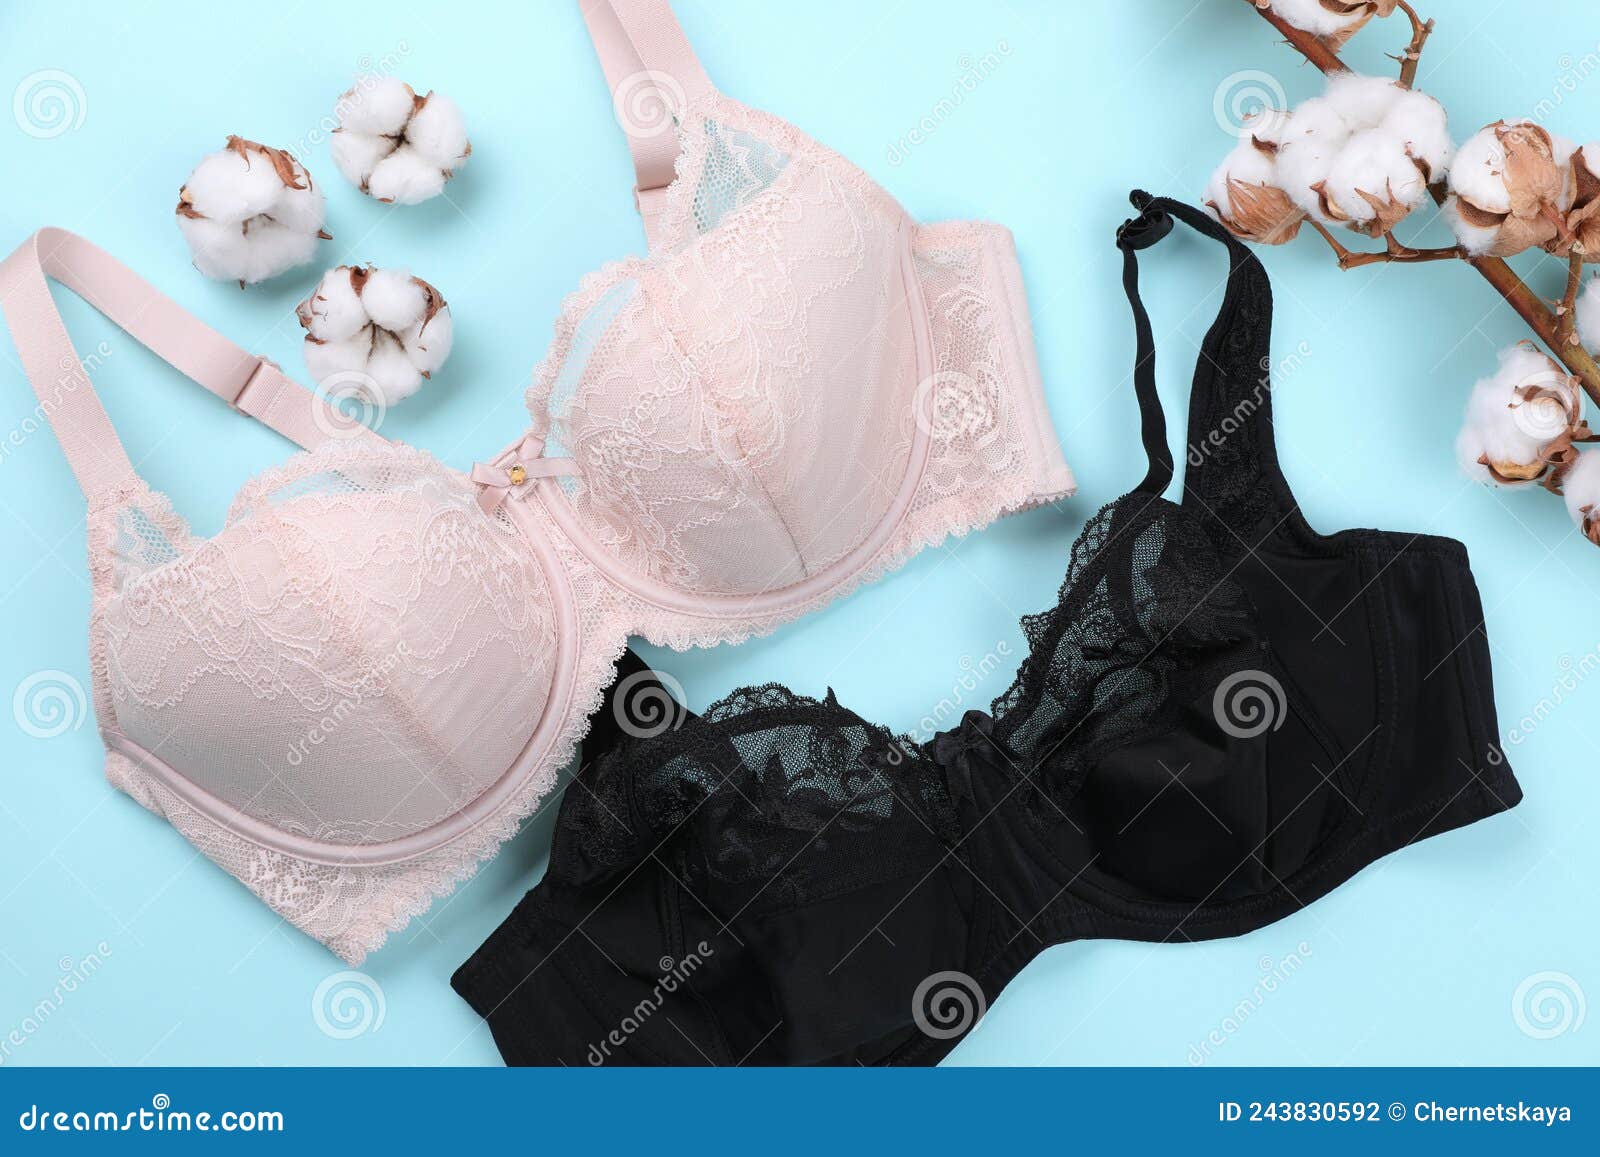 https://thumbs.dreamstime.com/z/elegant-plus-size-women-s-bras-fluffy-cotton-flowers-light-blue-background-elegant-plus-size-women-s-bras-fluffy-cotton-243830592.jpg